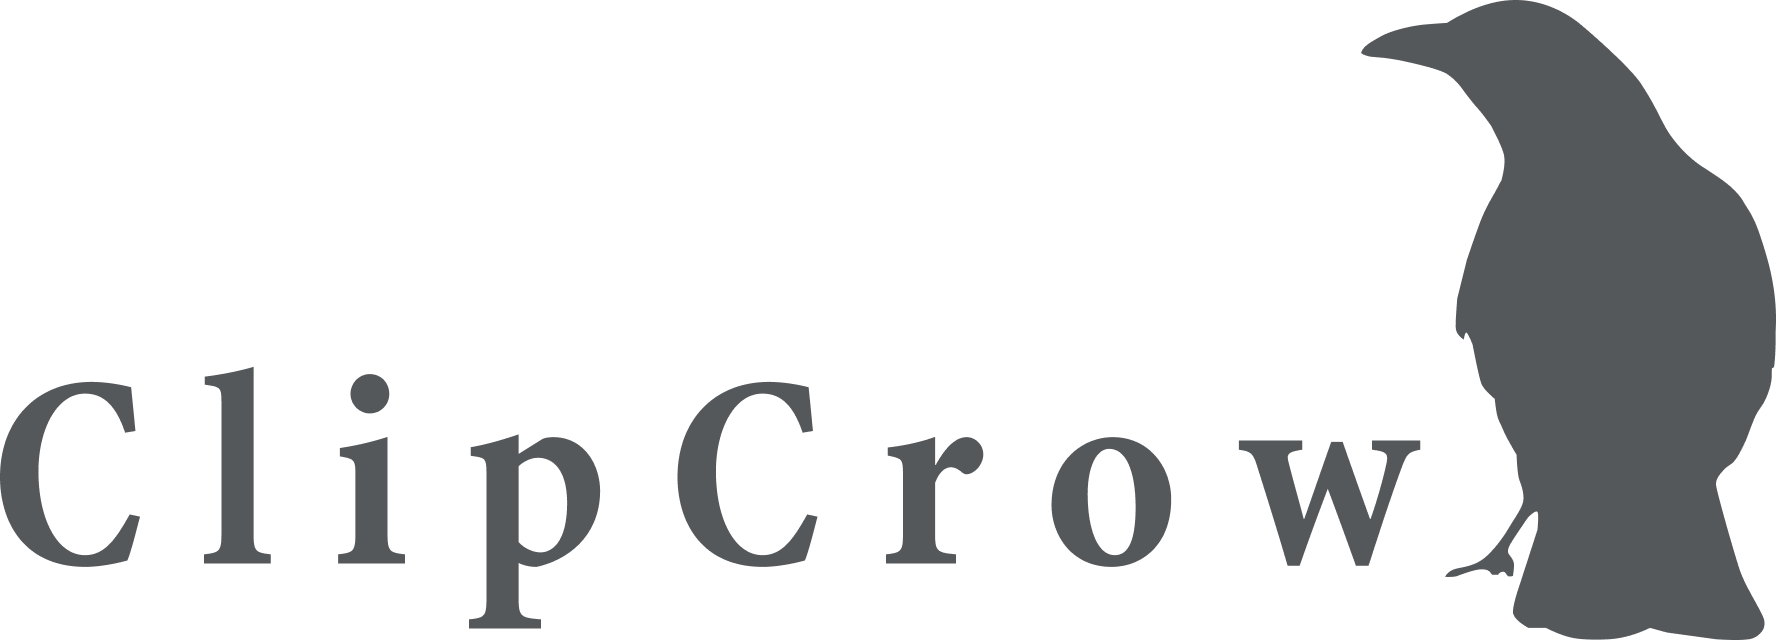 clip-crow logo